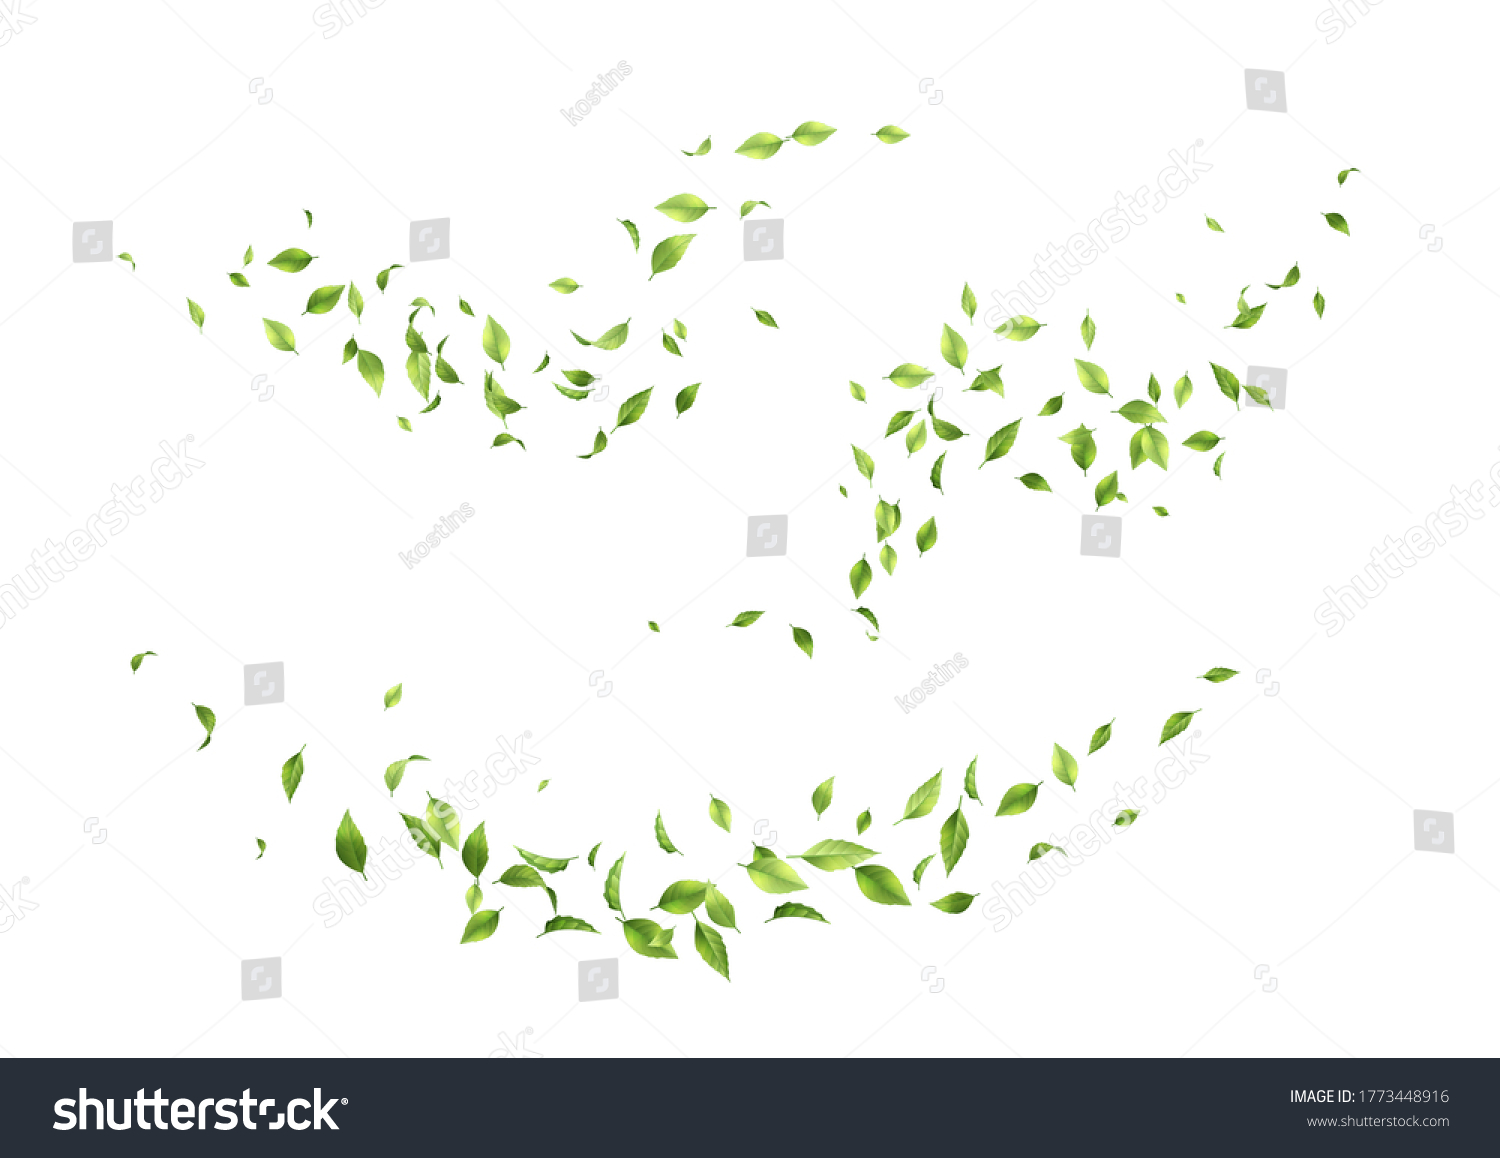 SVG of Flying green leaves. Set of waves formed by green leaves svg